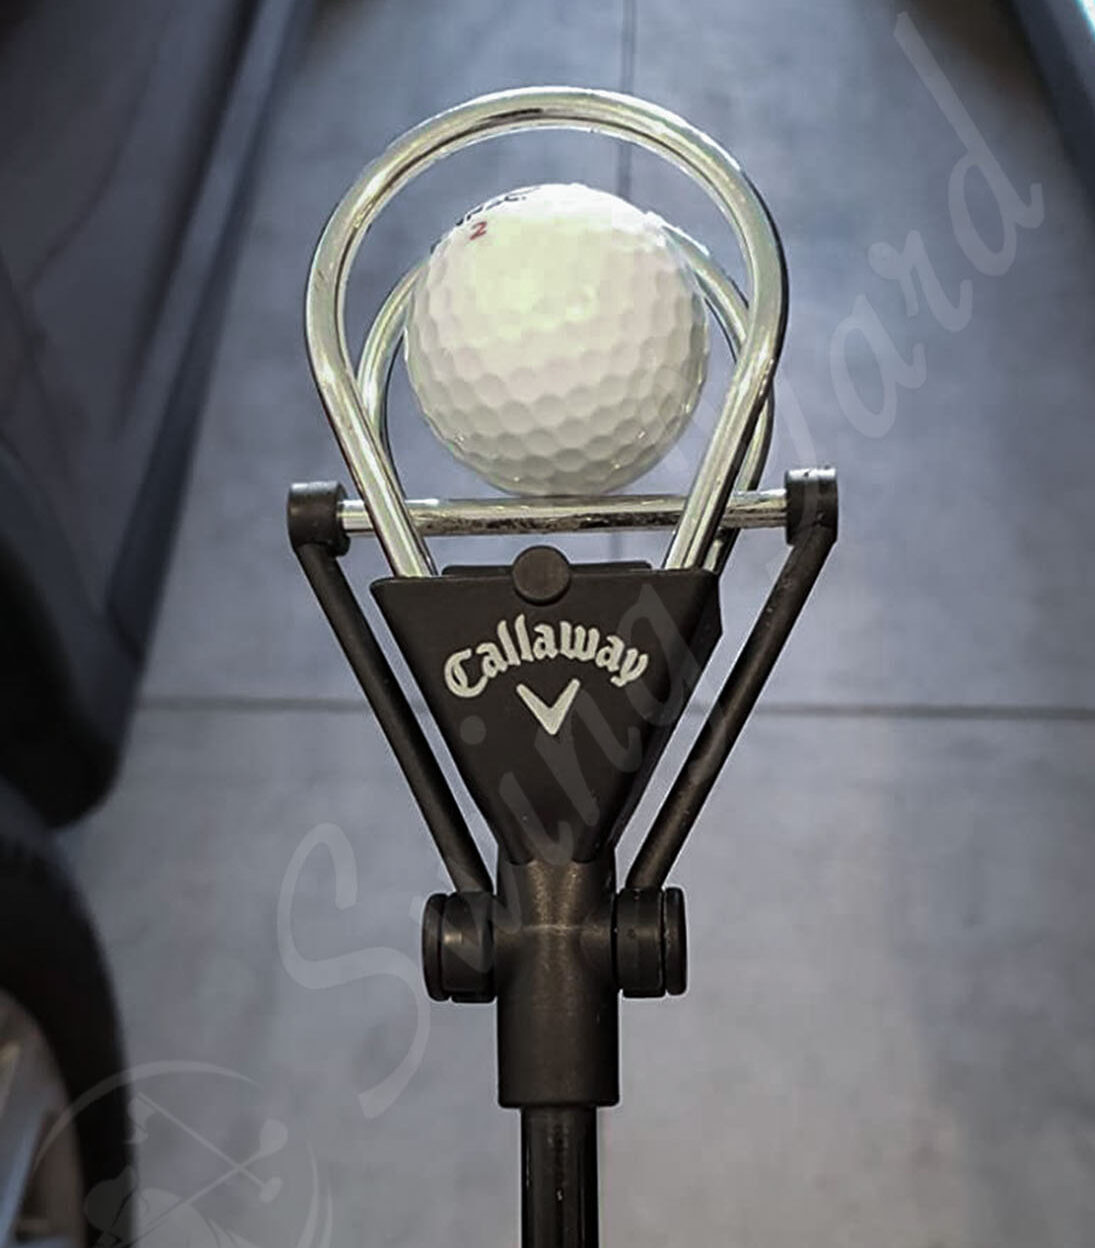 The Callaway 15th Club Golf Ball Retriever for testing in my garage